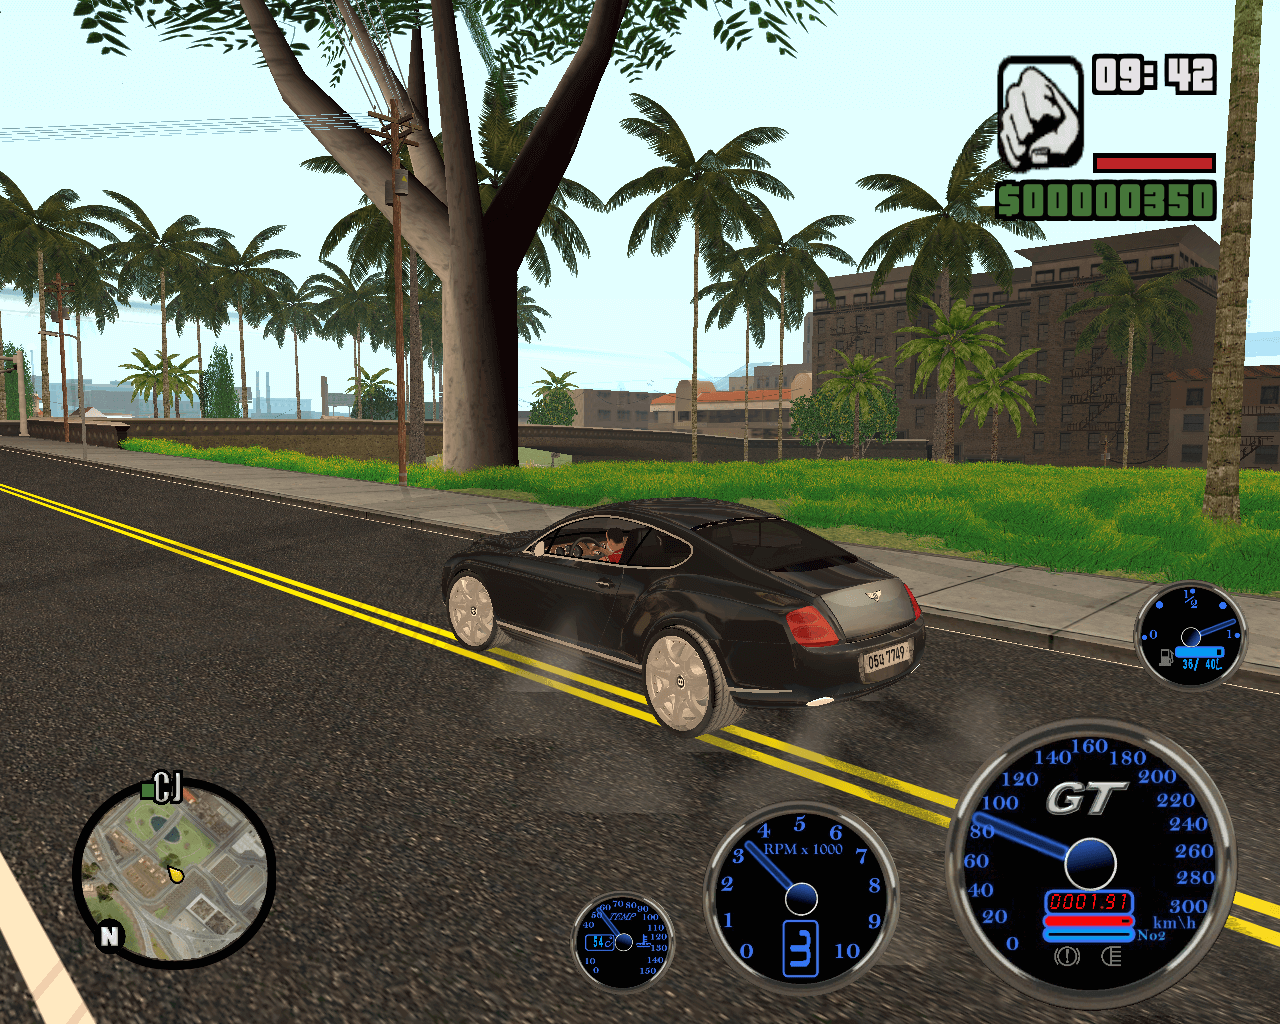 GTA San Andreas Super Cars